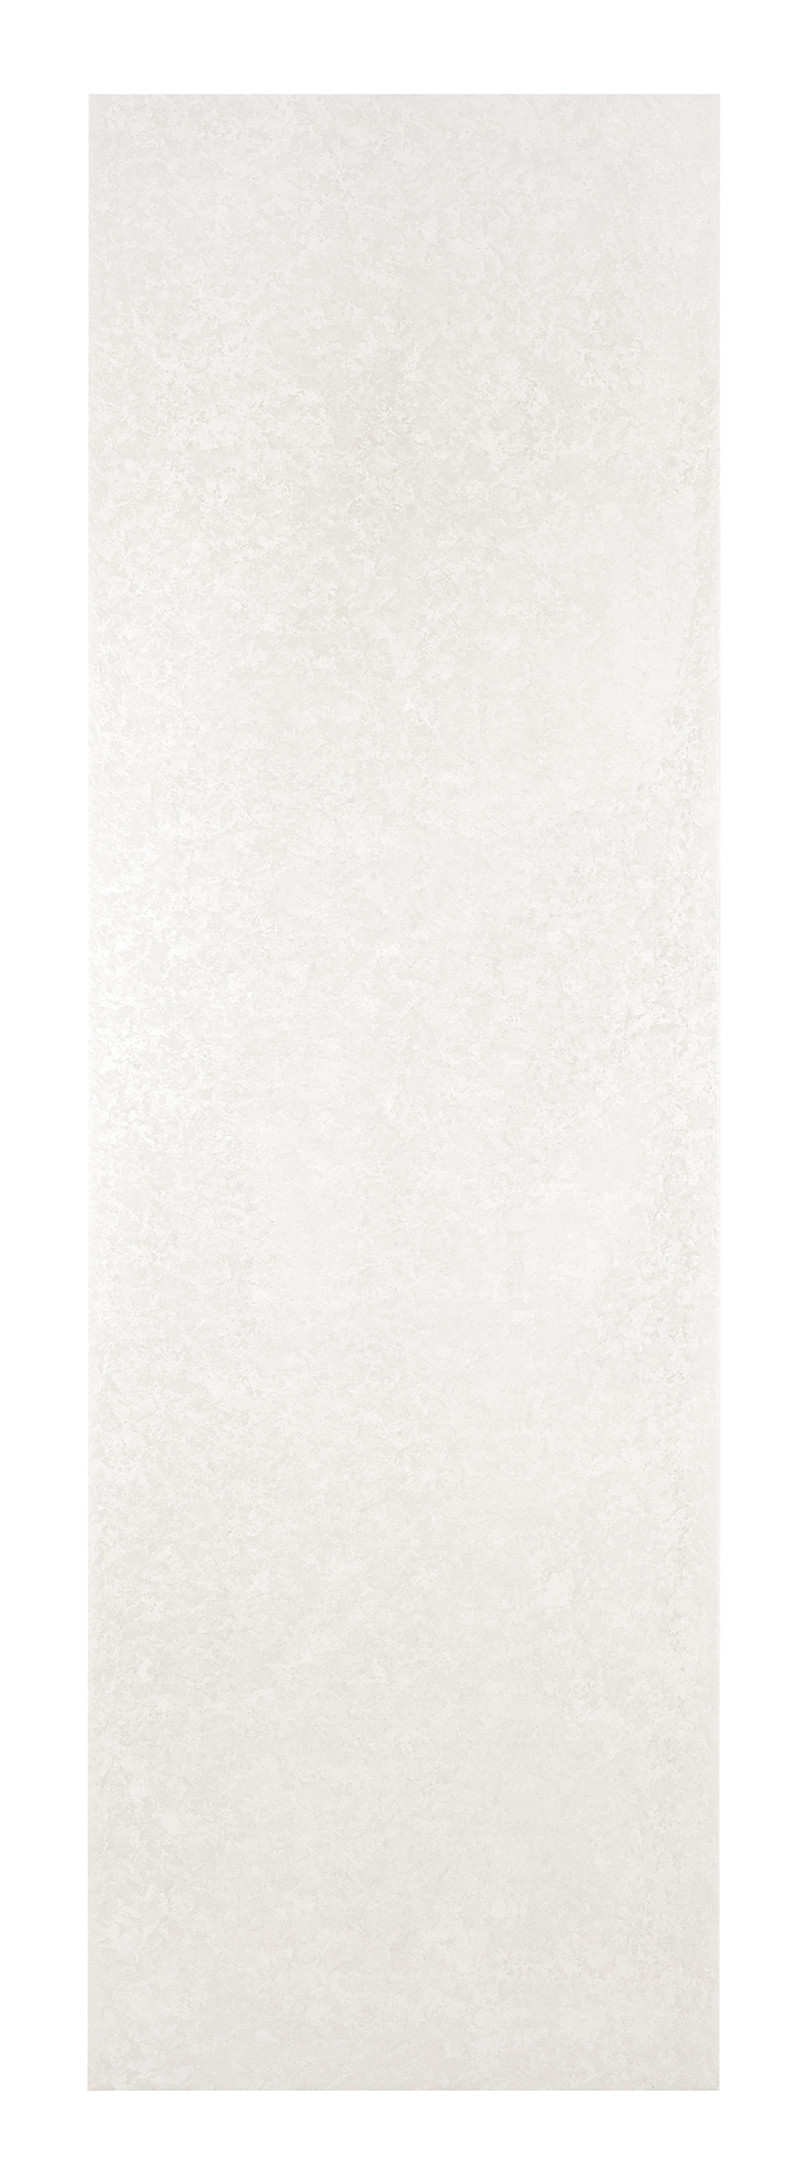 OMQ-8823白花玉批发、价格、出厂价、供应商【东莞市欧亚轩装饰建材有限公司】图片